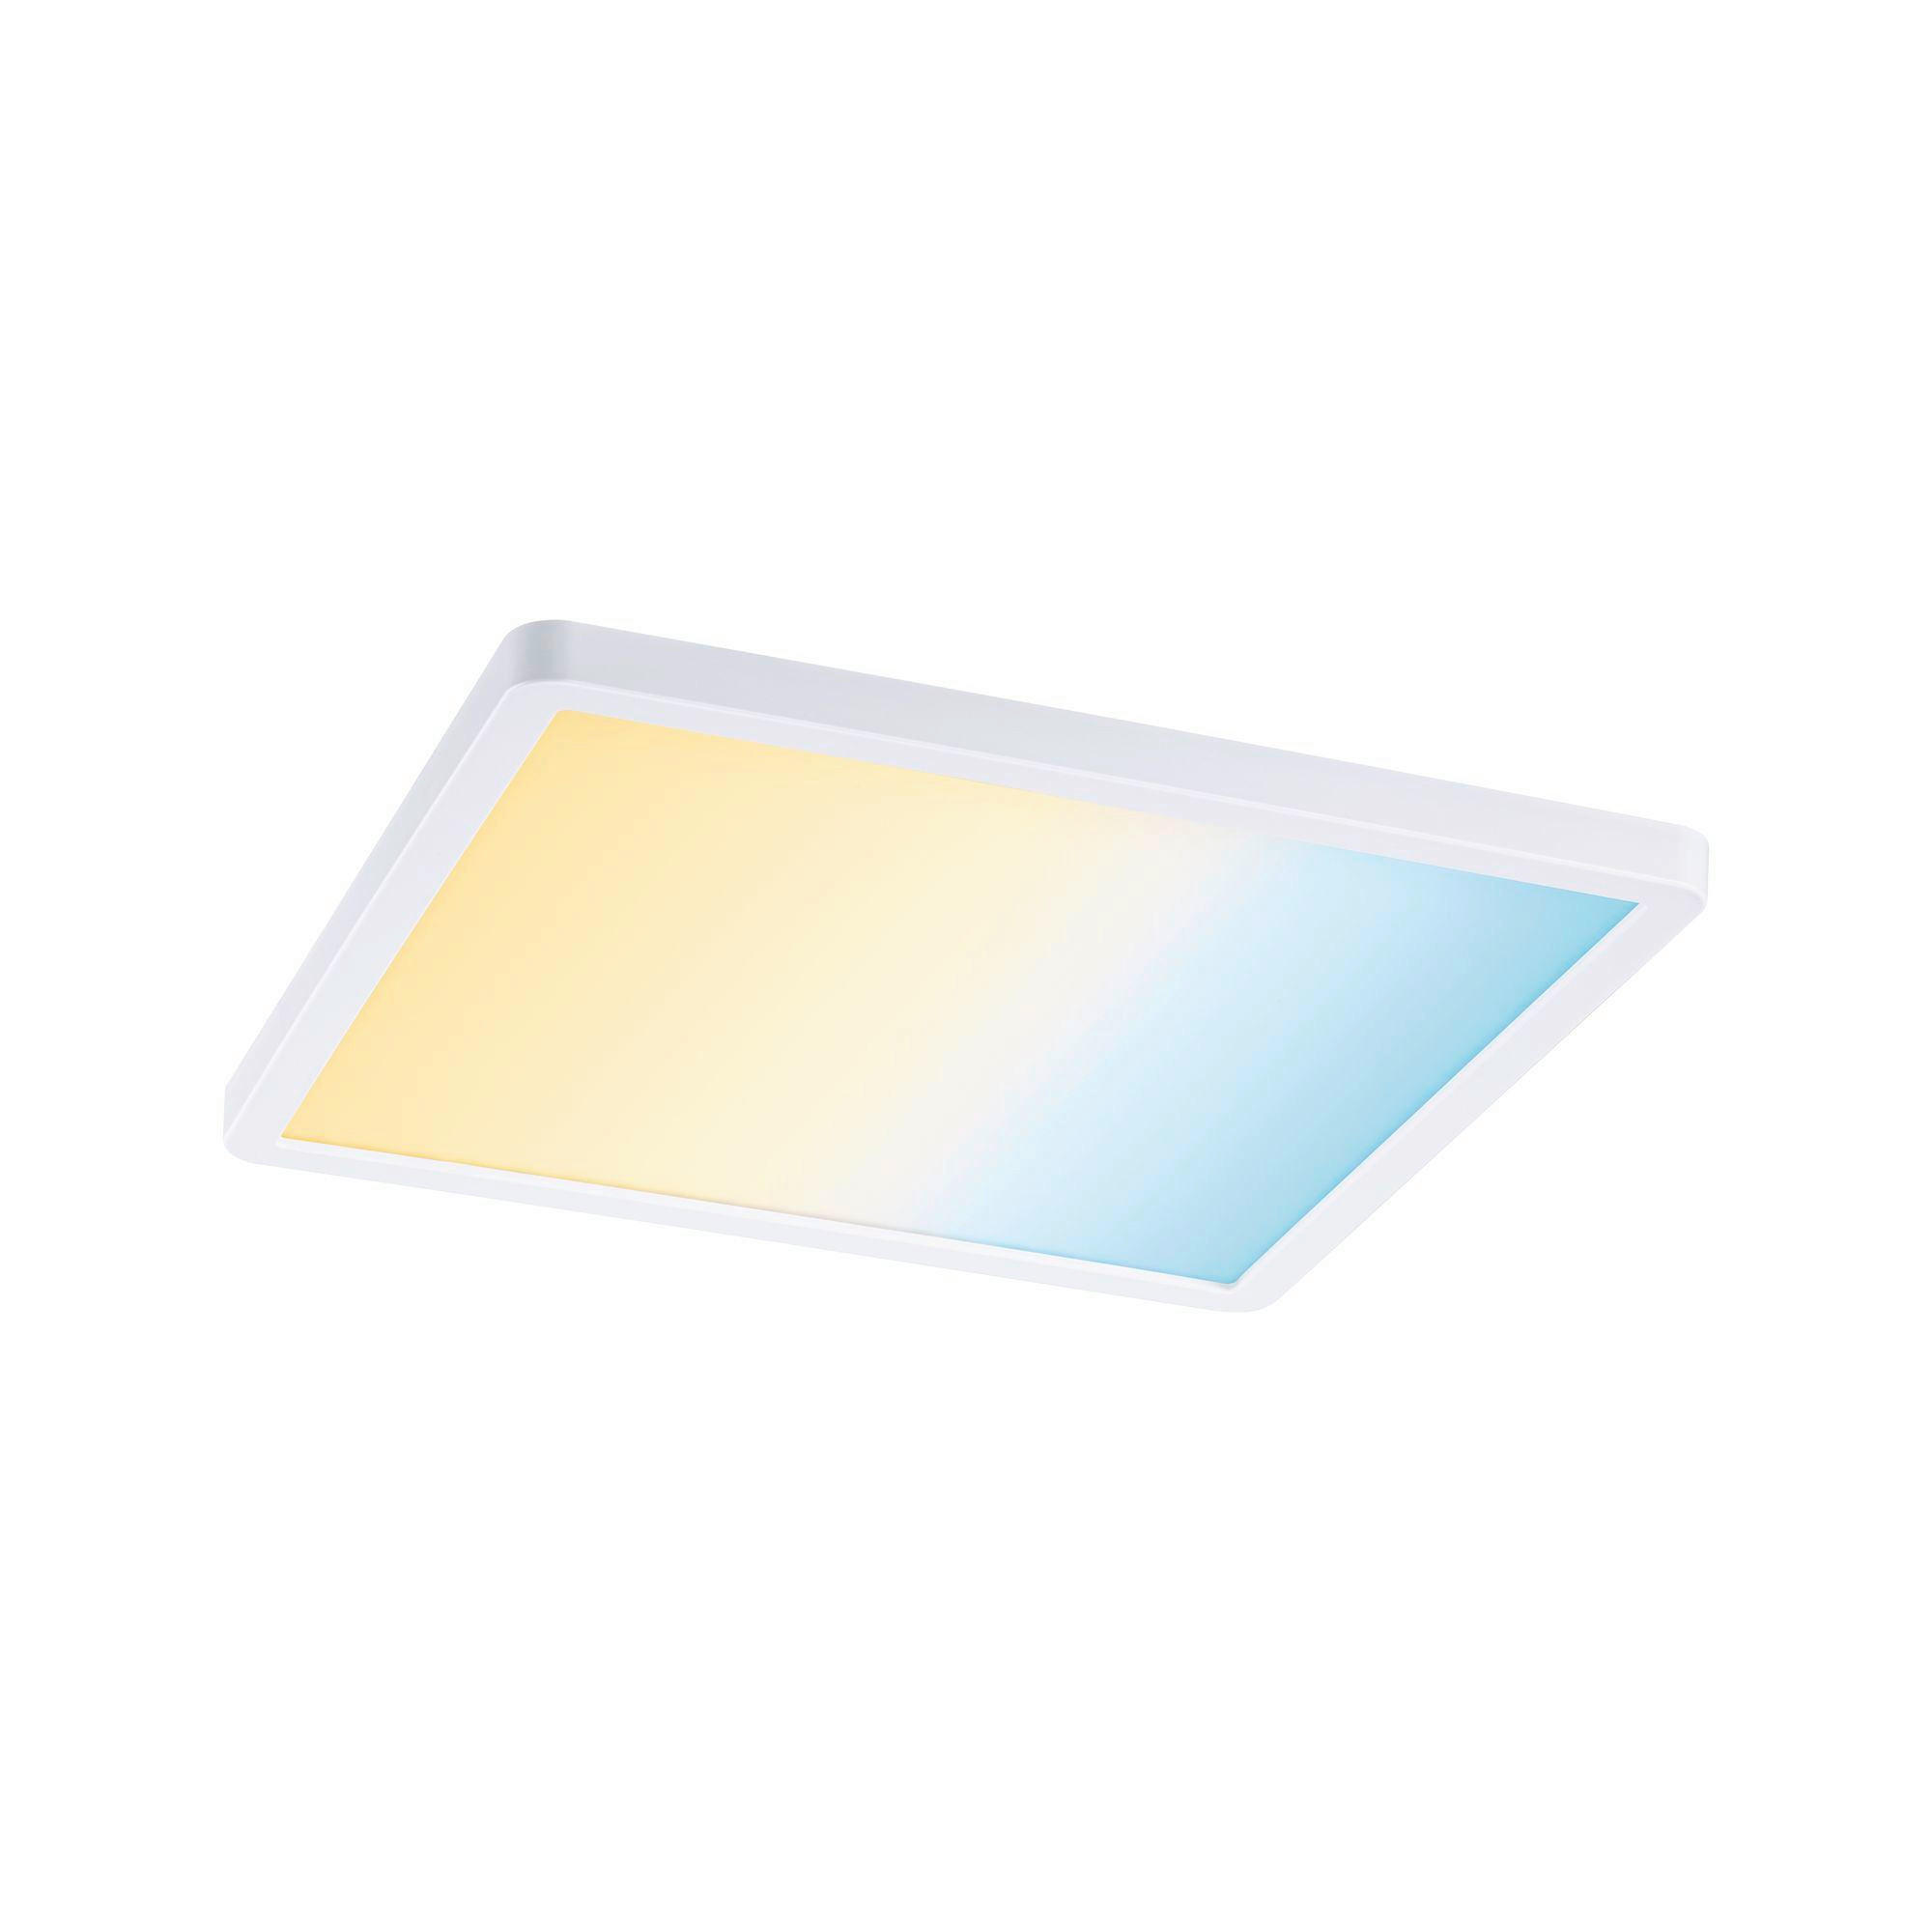 LED-PANEEL  - Weiß, Design, Kunststoff (23/23cm) - Paulmann